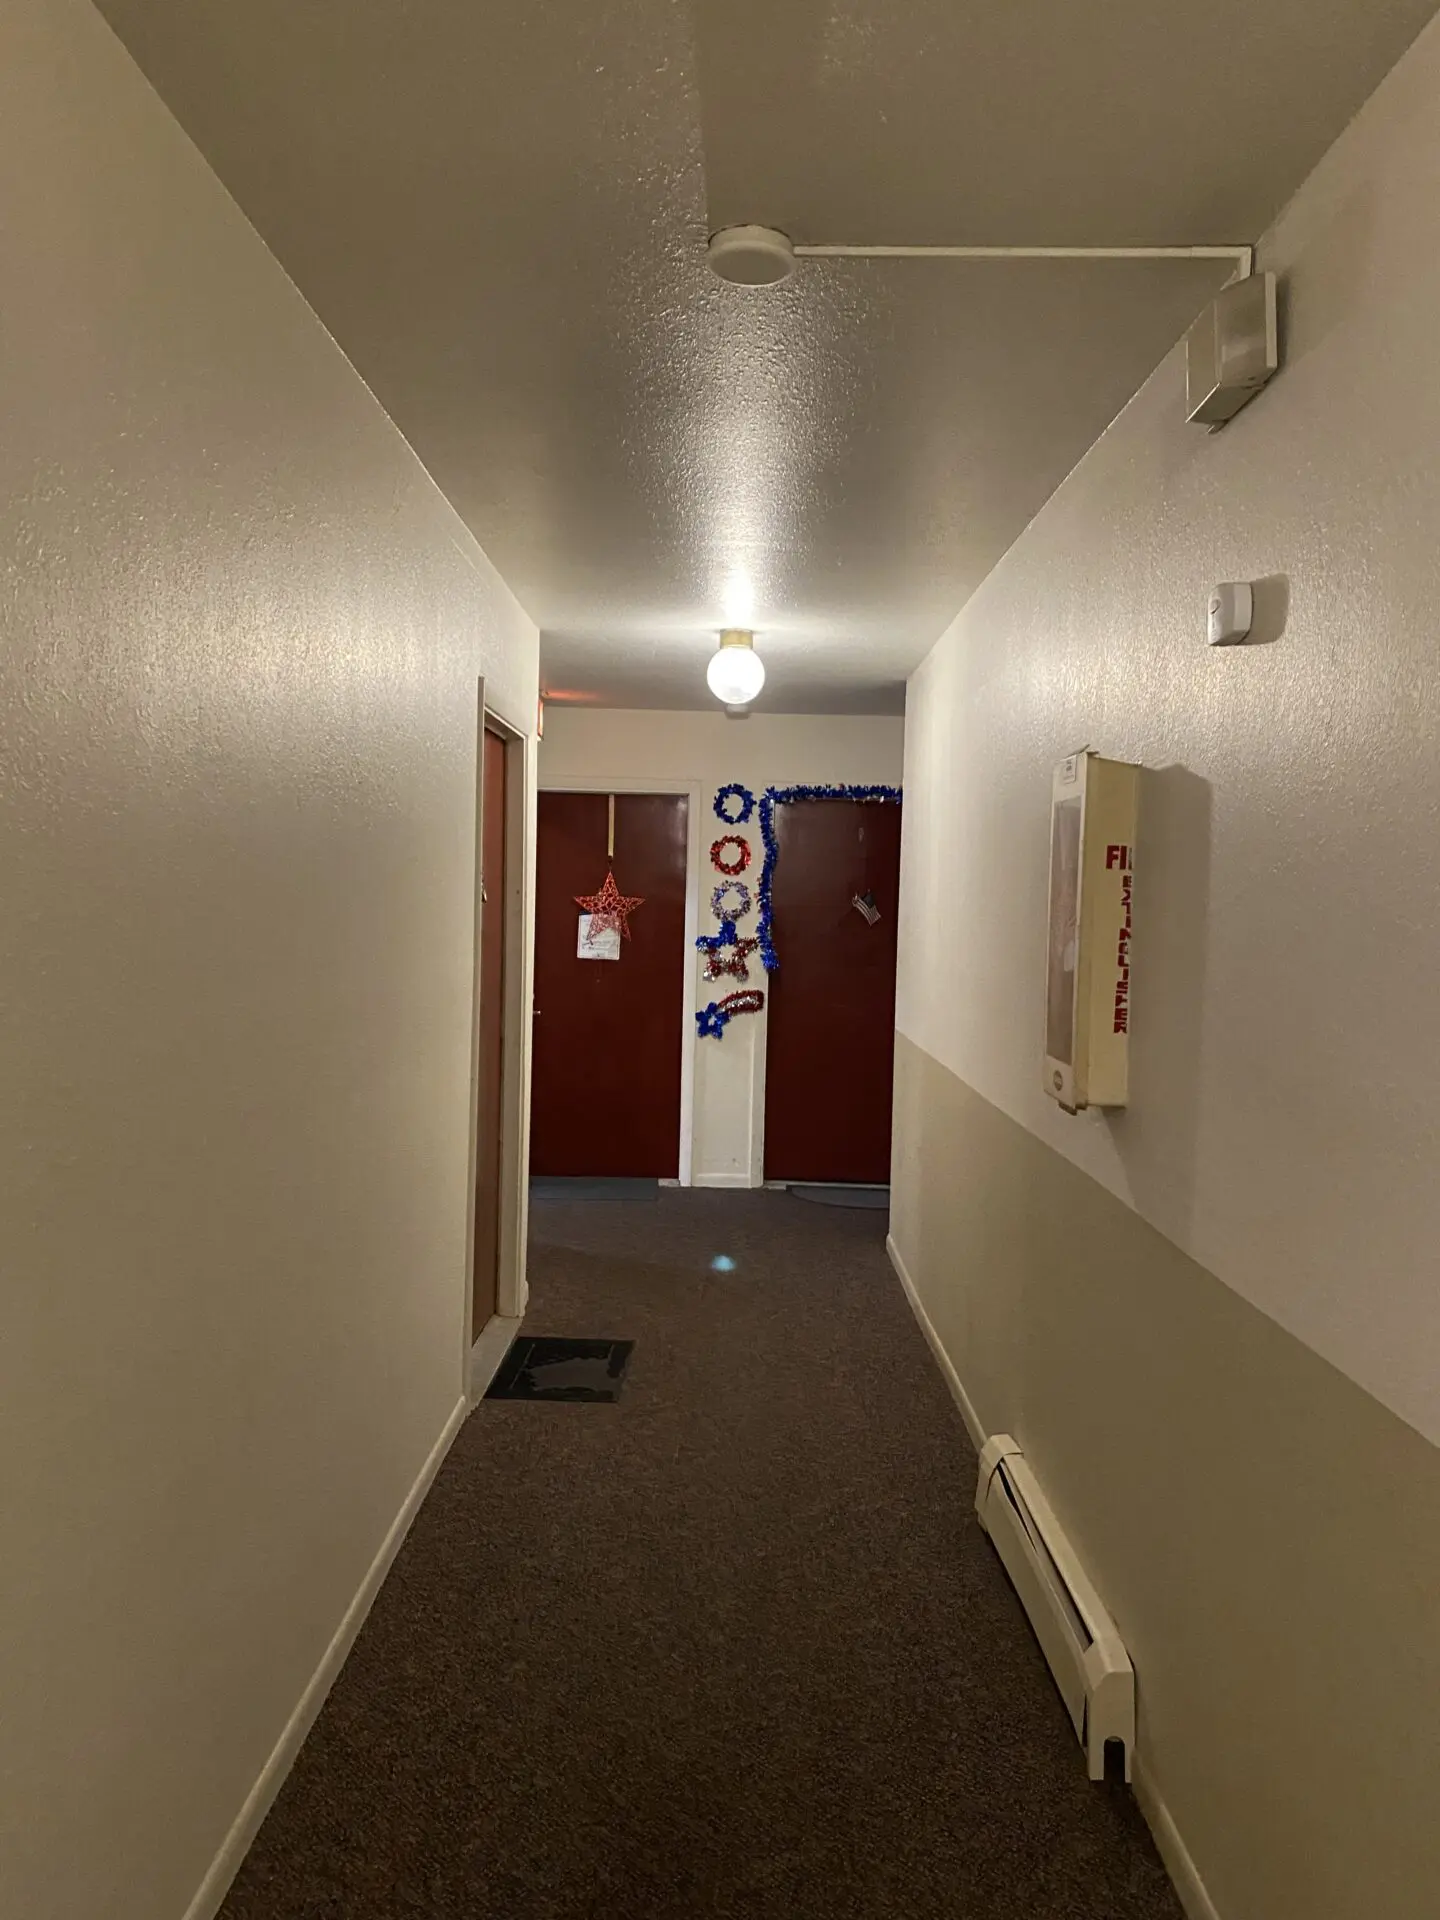 Ridgeview apartments interior and corridor